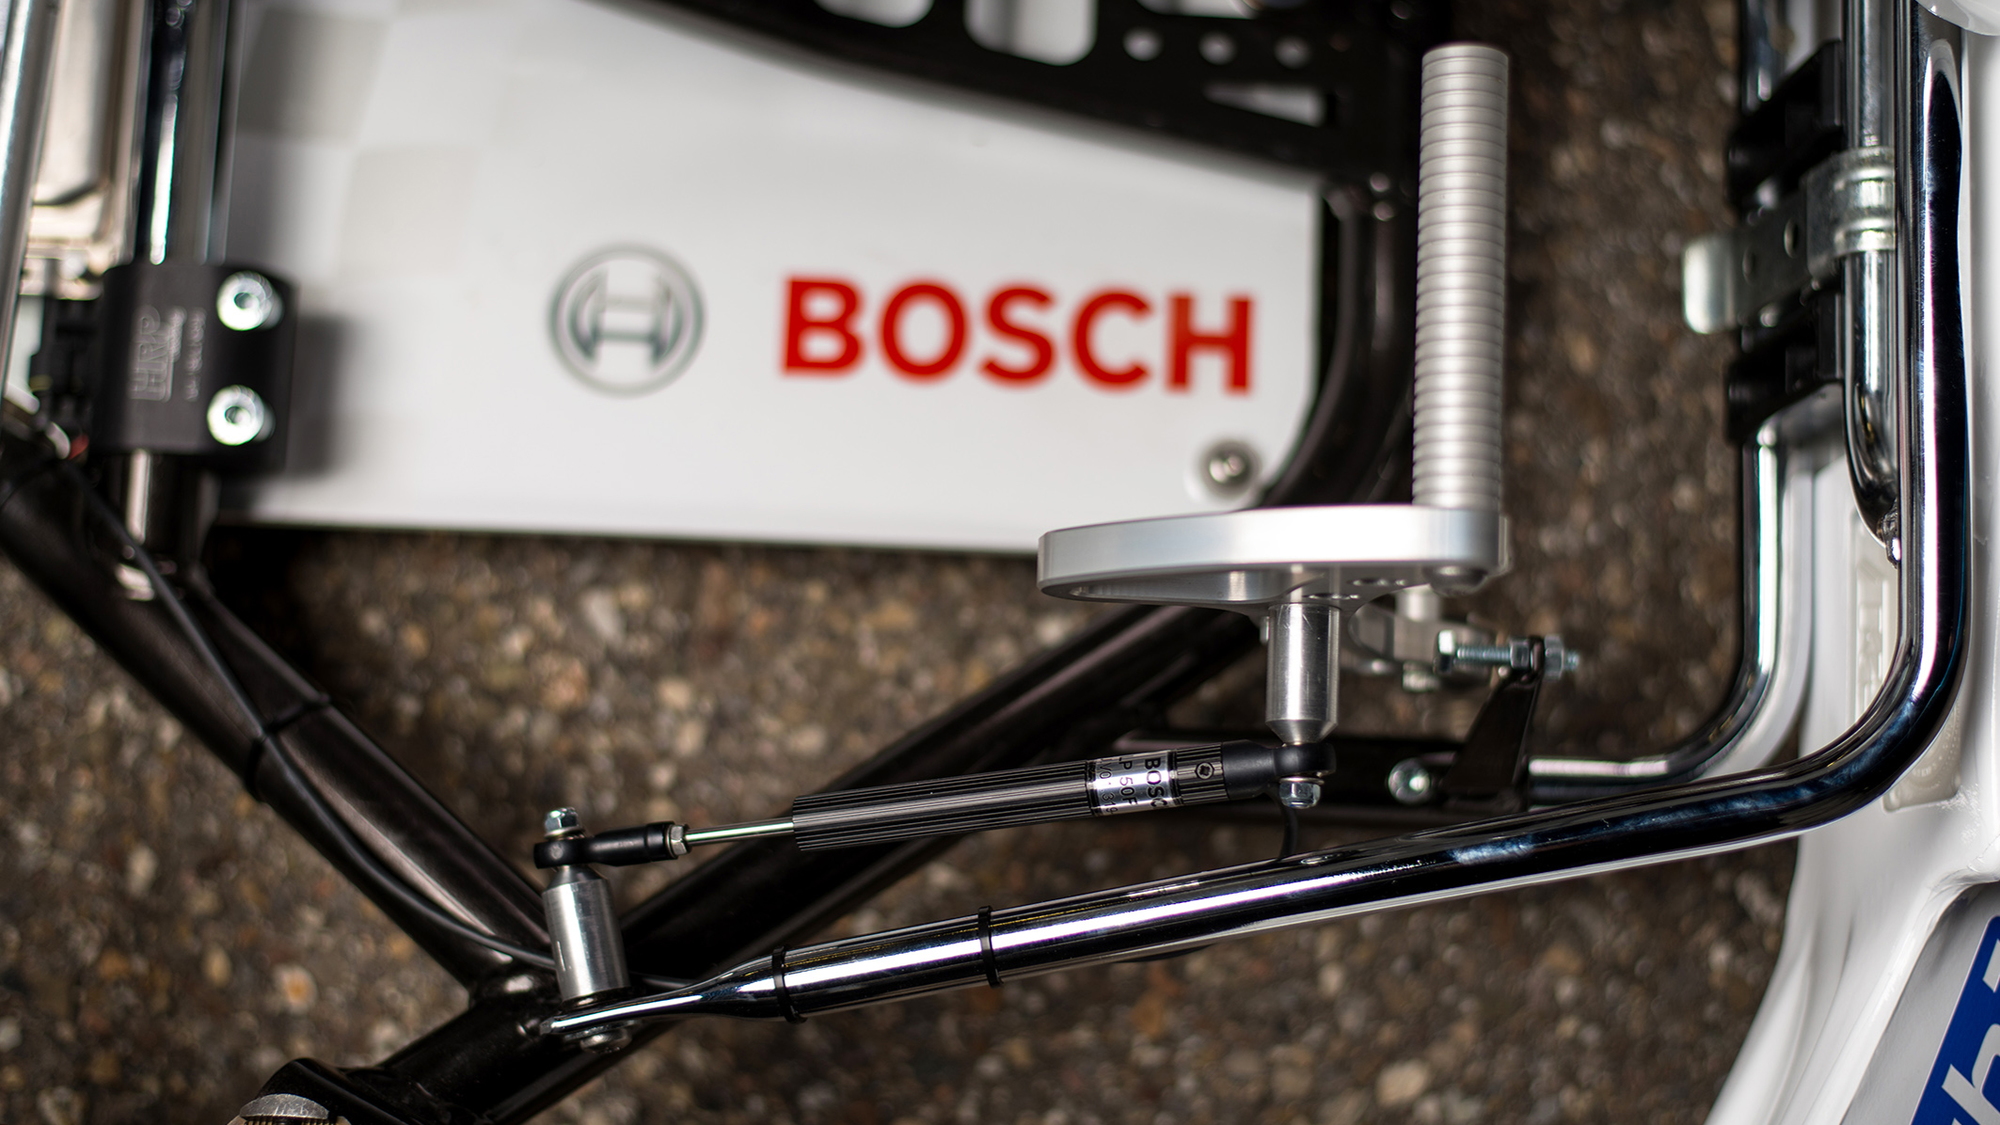 Bosch e-kart concept